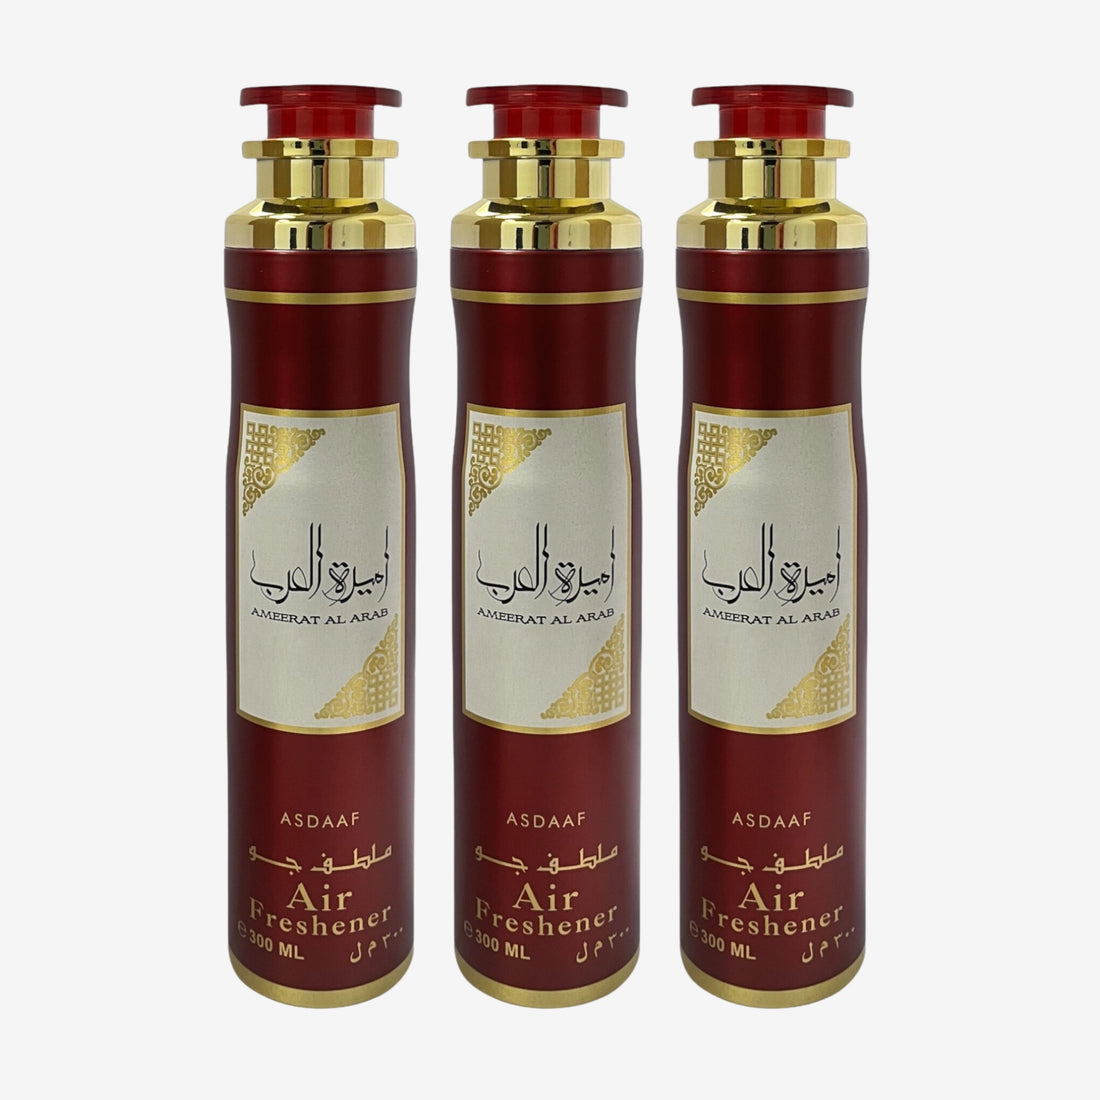 Asdaaf Ameerat Al Arab Air Freshener